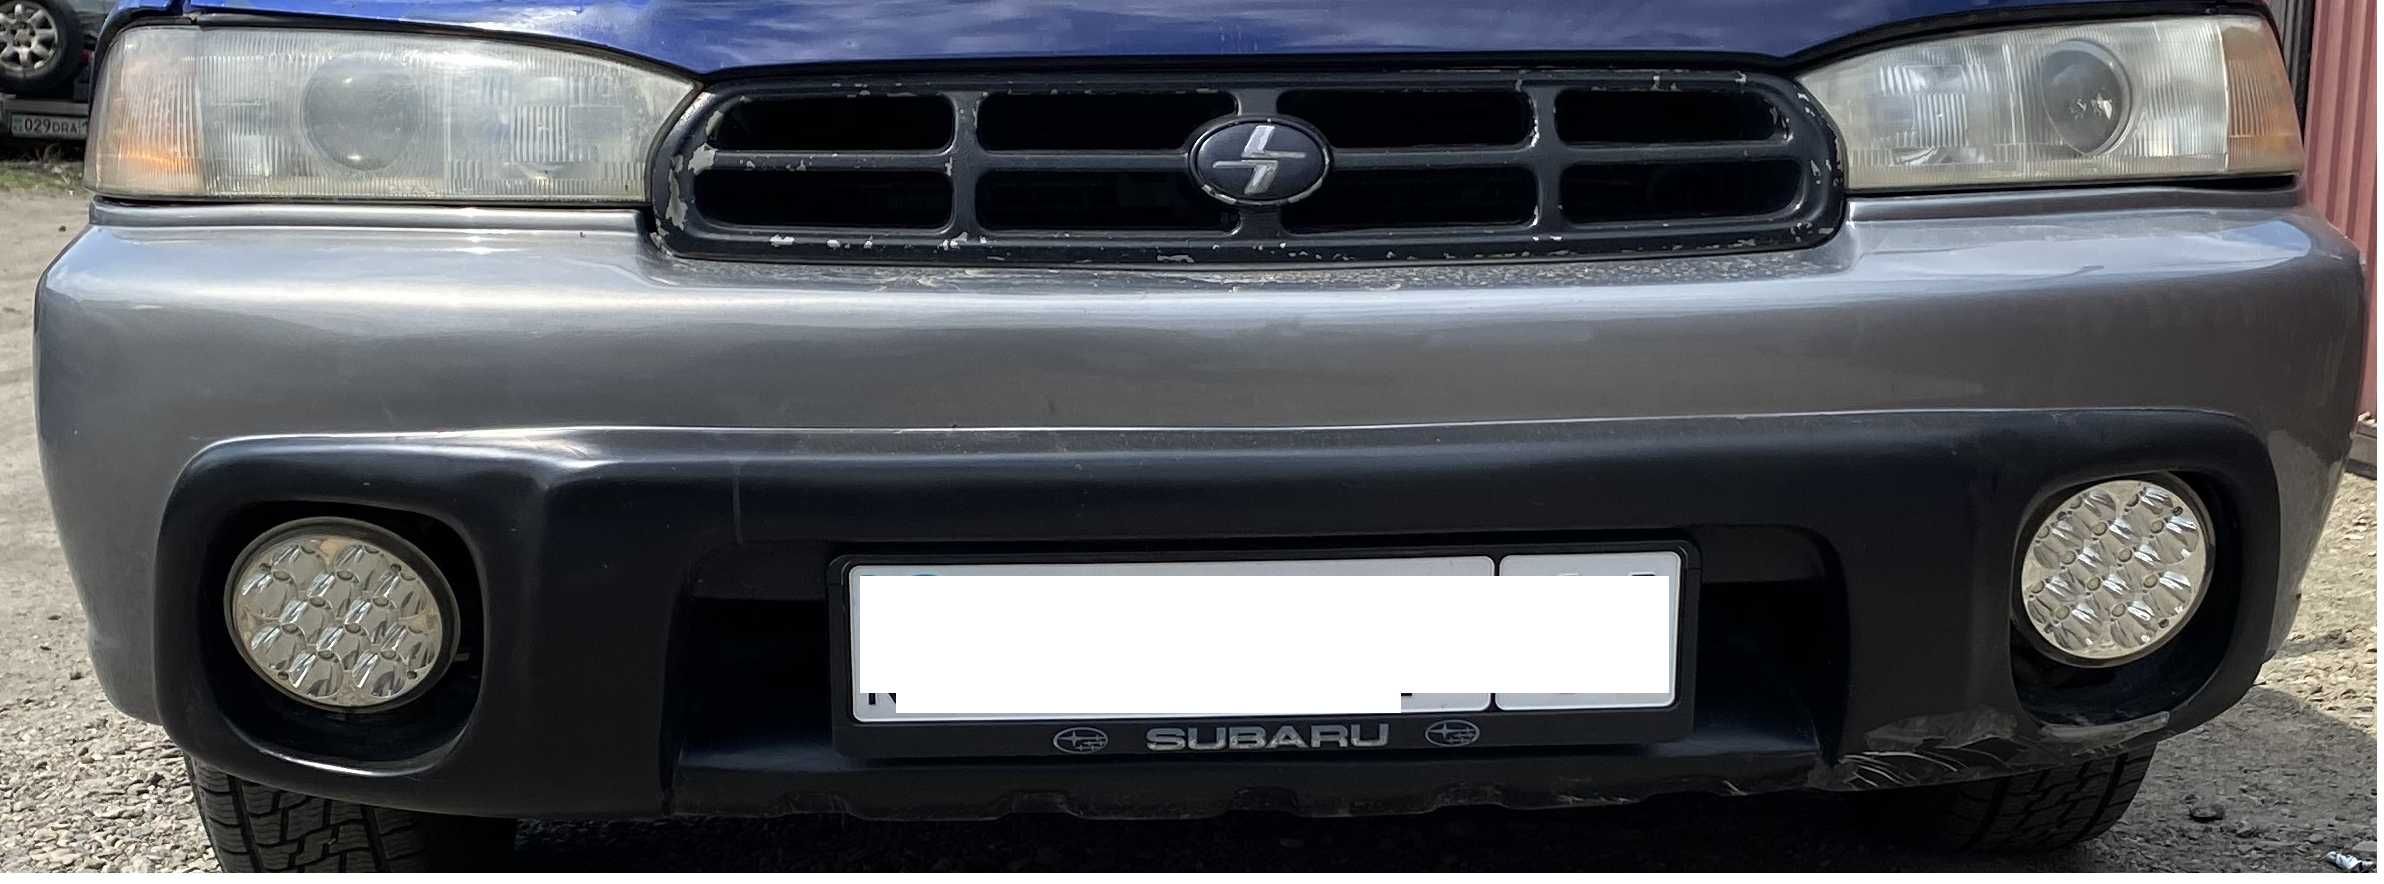 Субару легаси (Subaru Legacy) BG9 капот, крыло, решетка радиатора